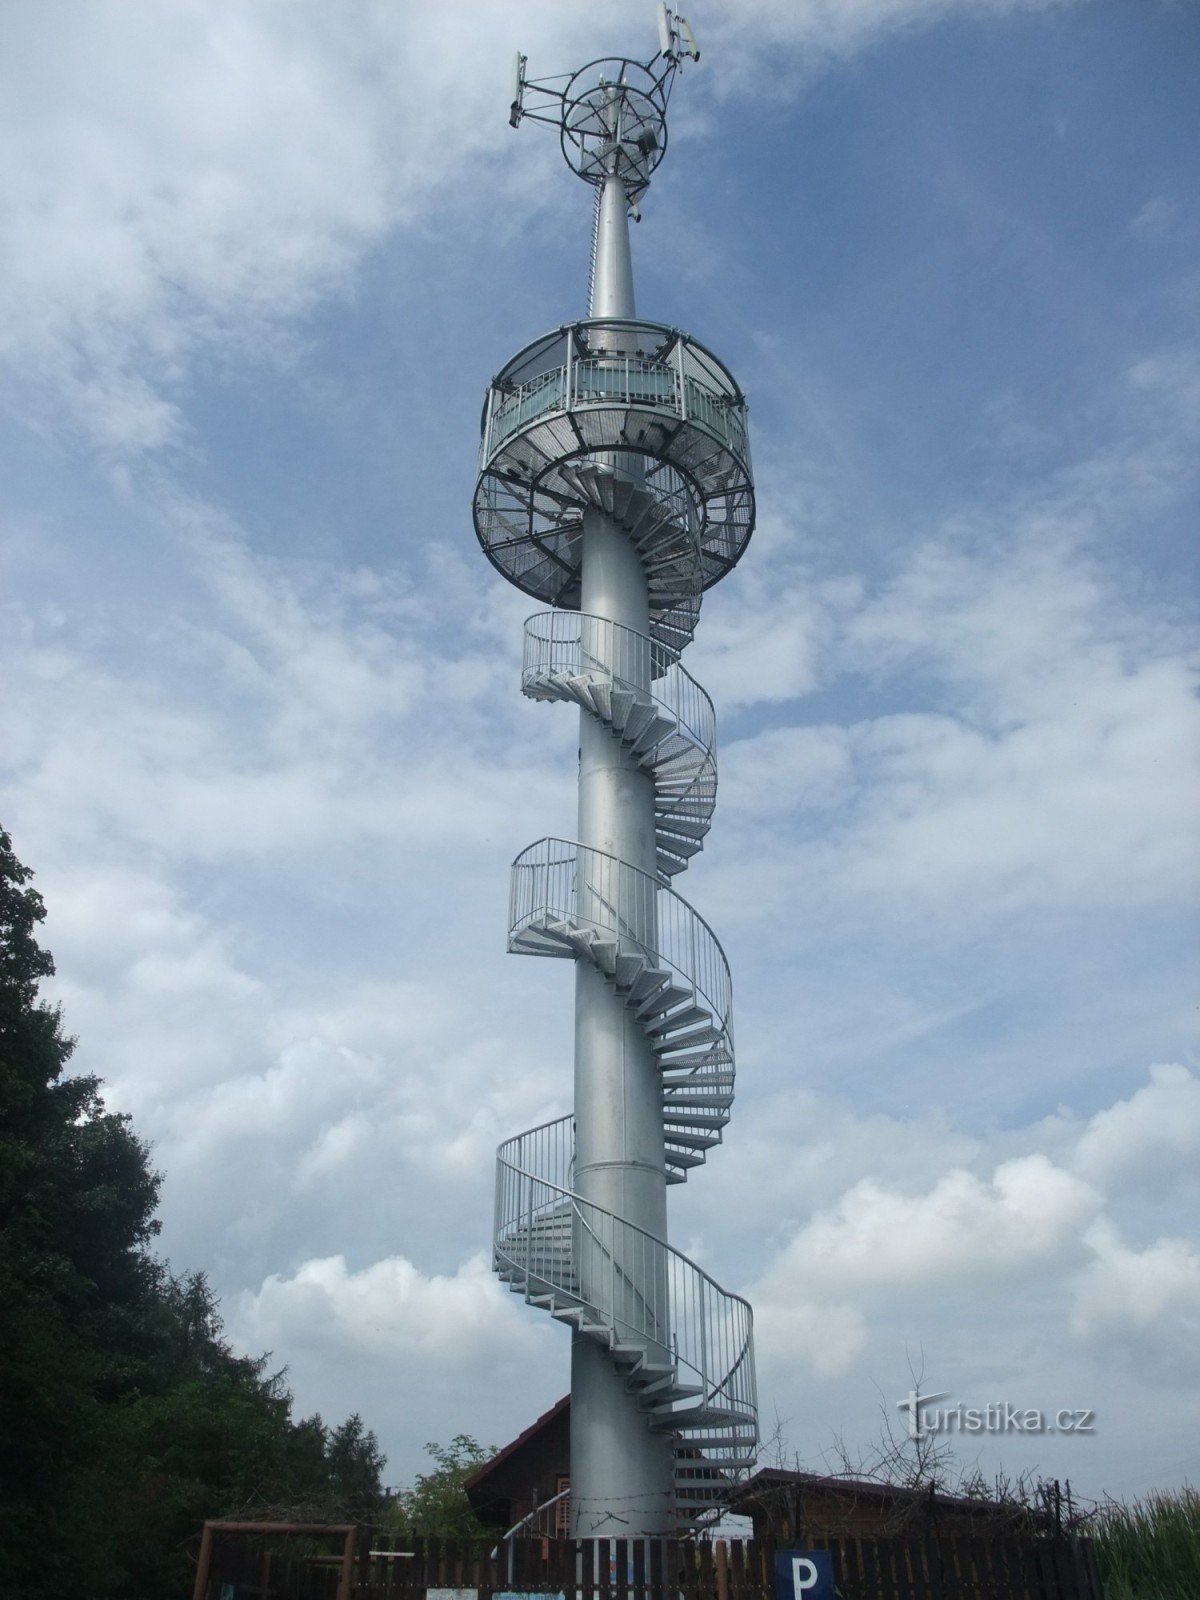 Mackova hora の見張り塔